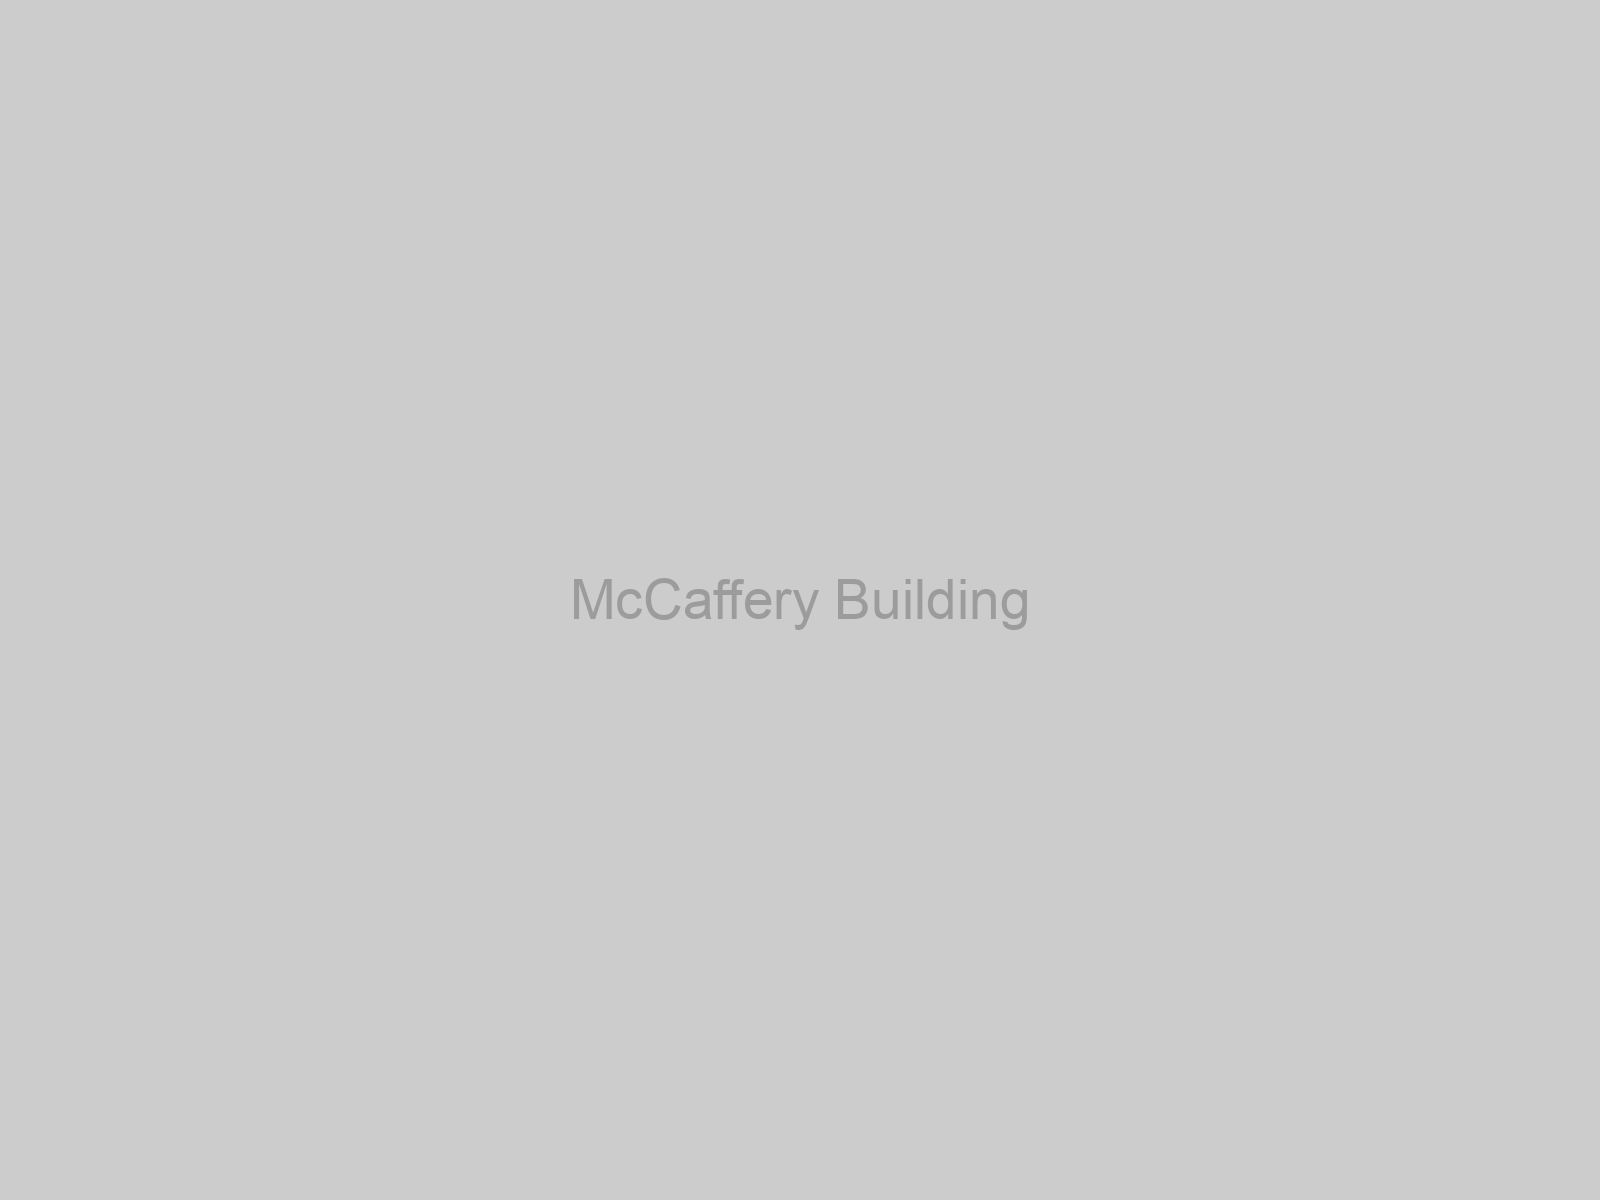 McCaffery Building